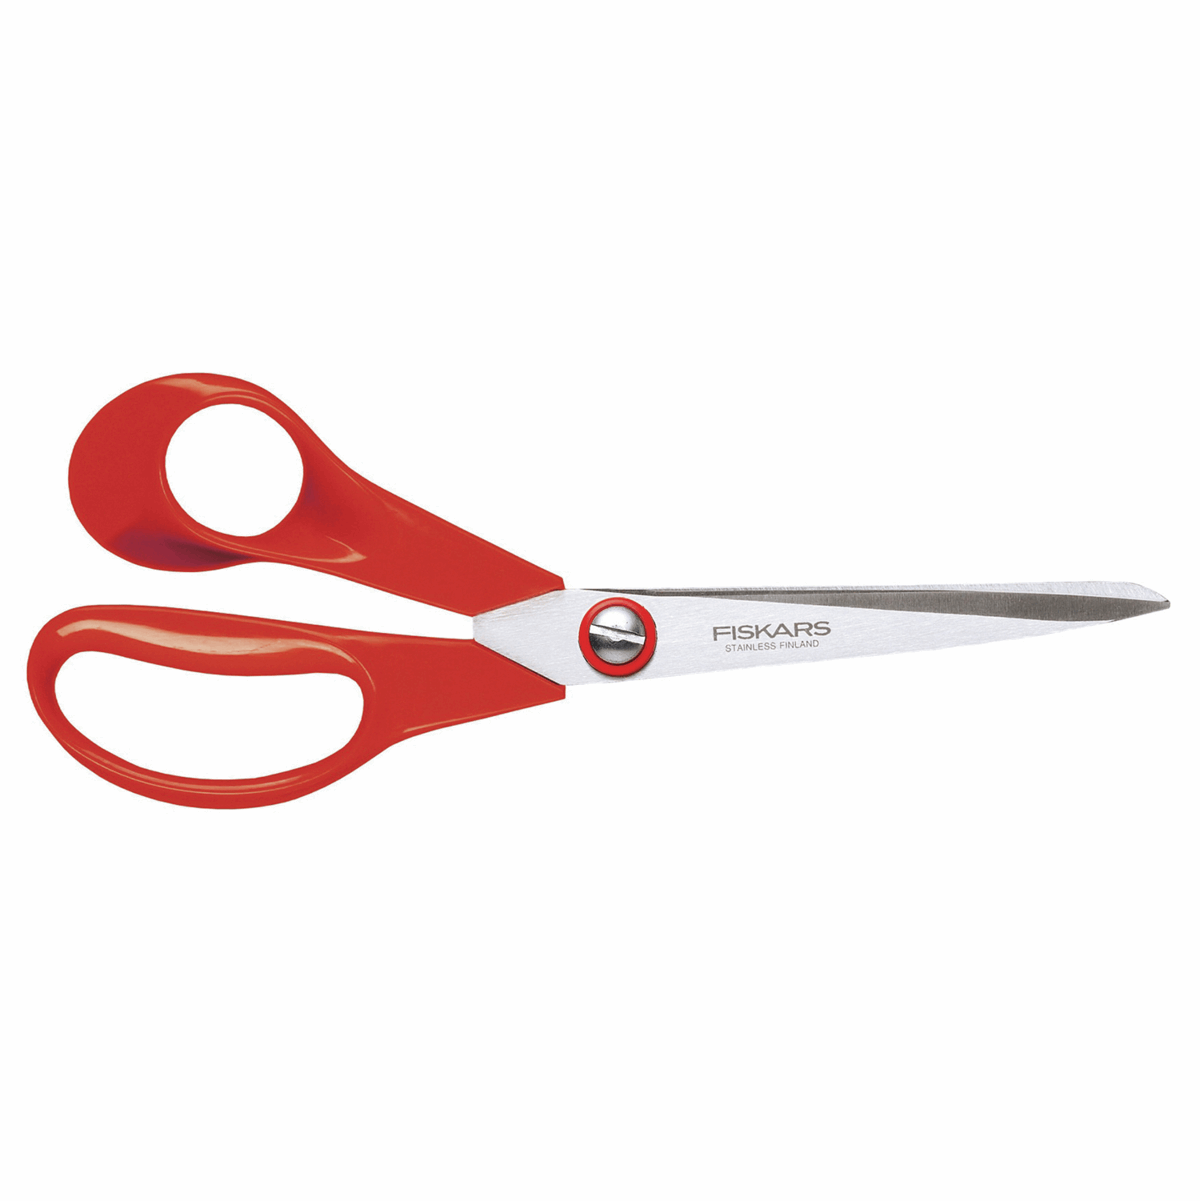 Fiskars Scissors - General Purpose Left Handed 21cm/8.25in